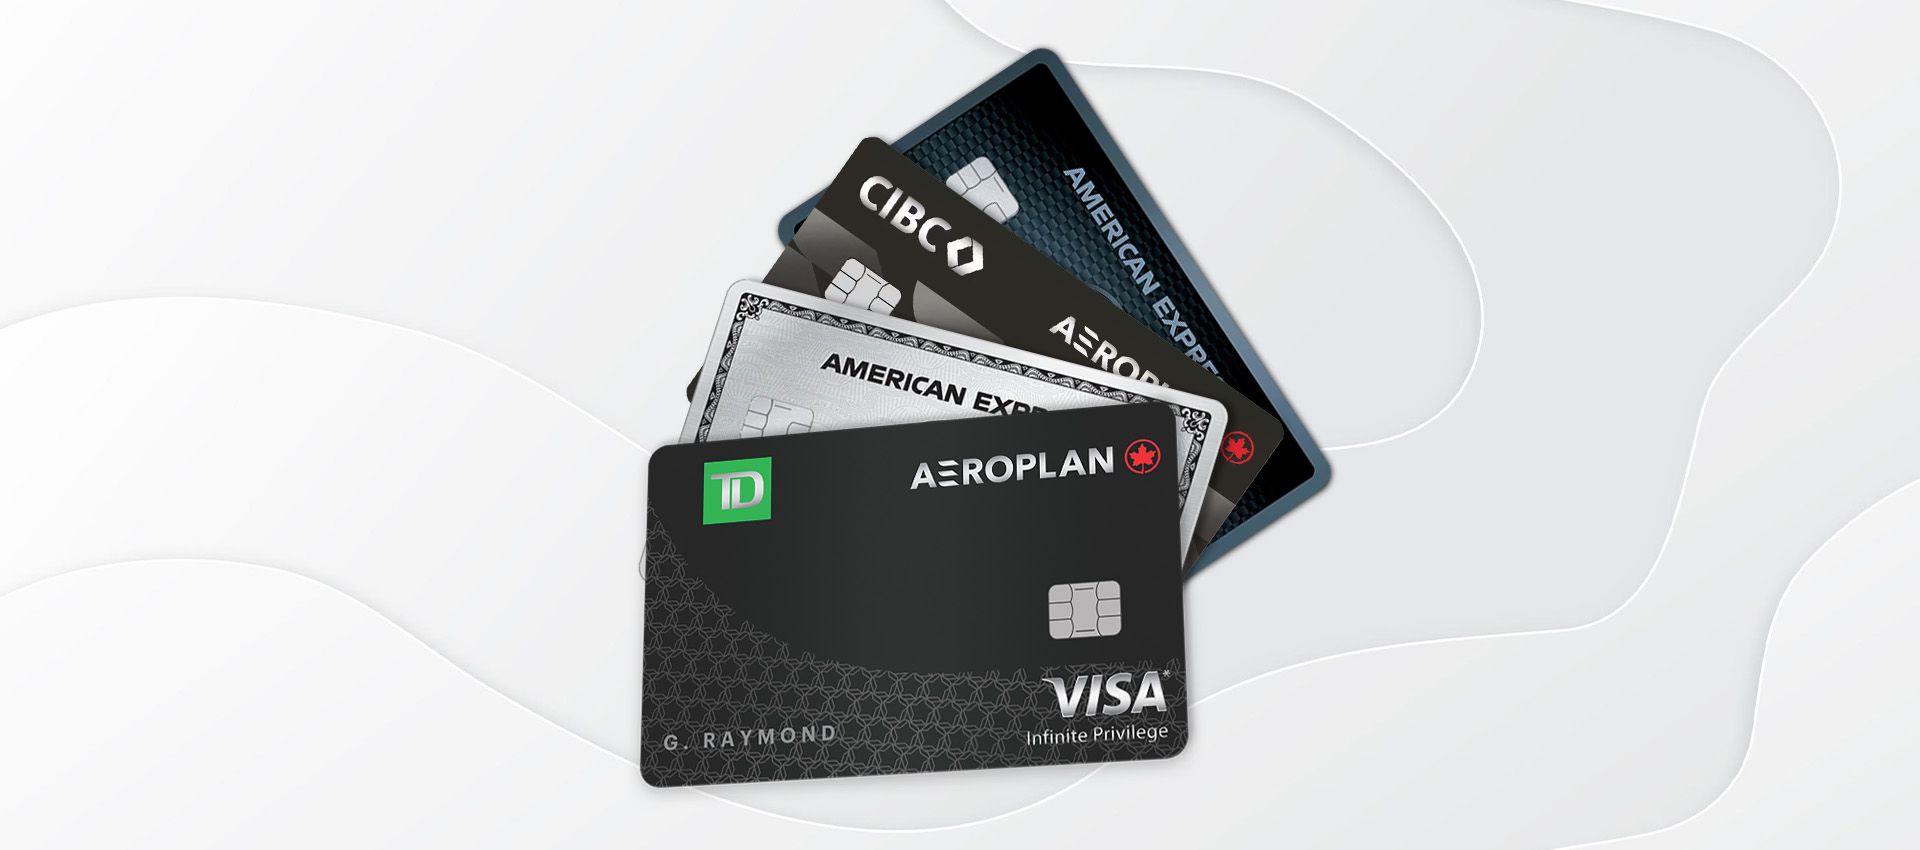 CIBC Amex and TD Aeroplan credit cards